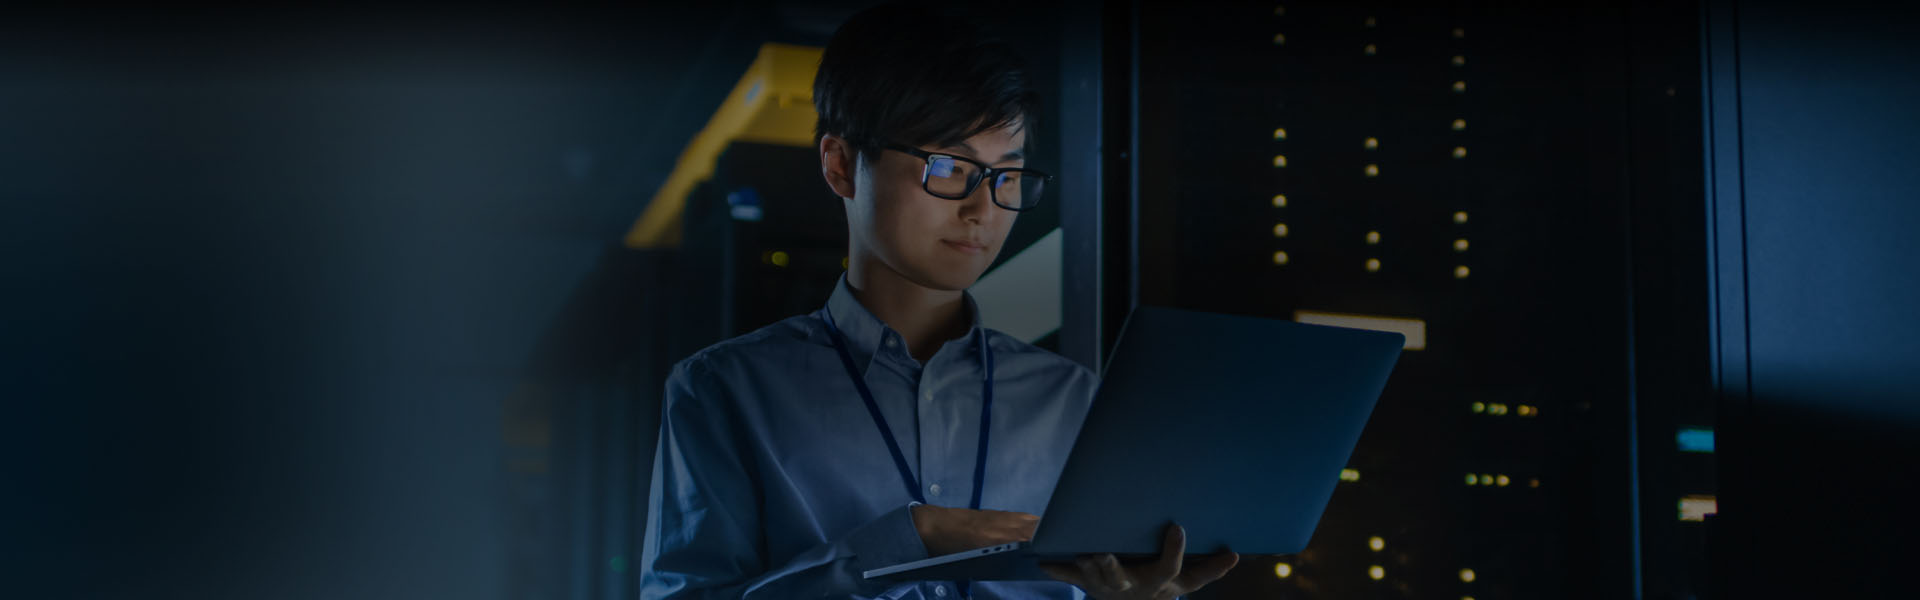 Geek technician looking at a laptop